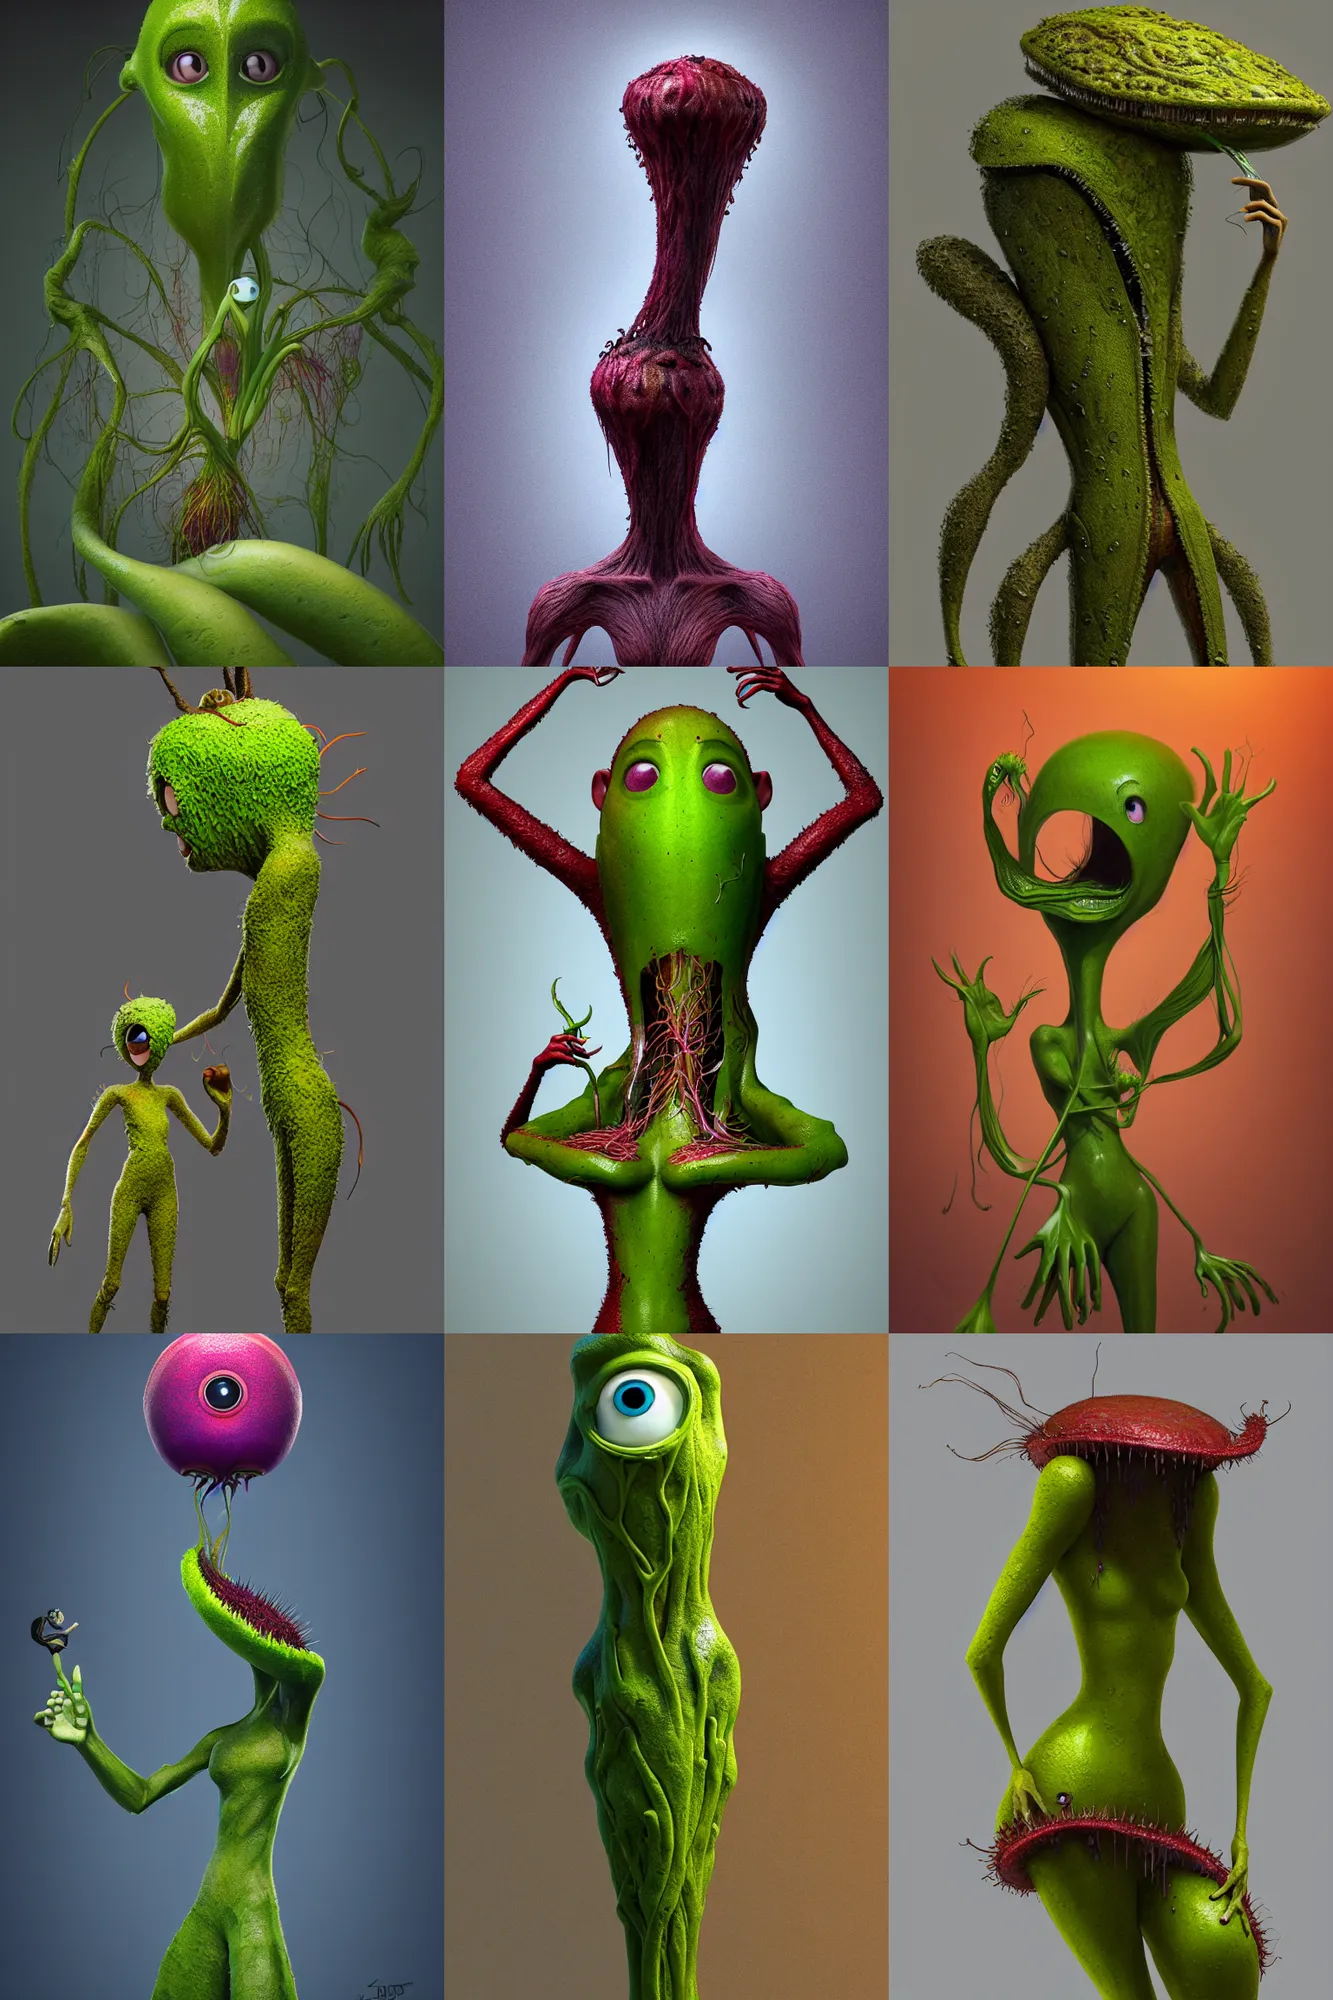 noisy-swan978: carnivorous plant alien humanoid female